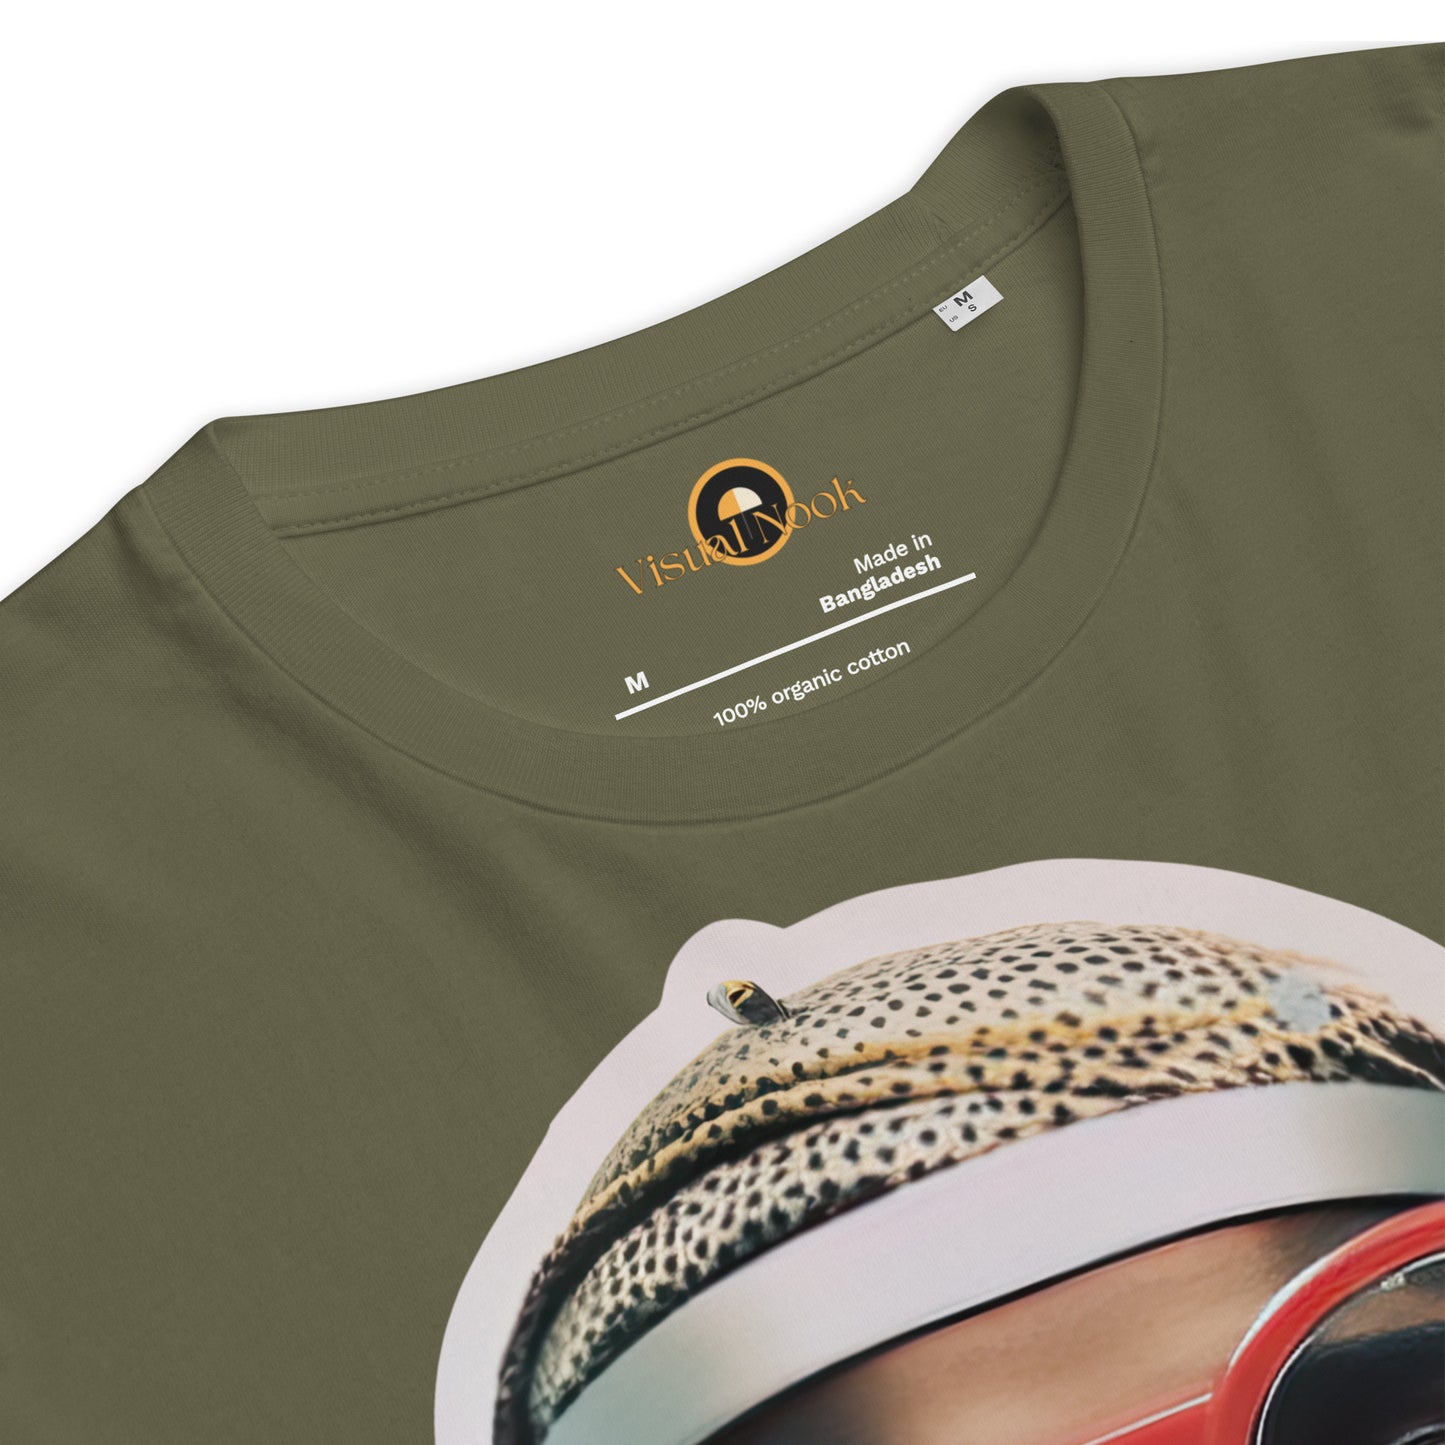 Men's T-shirt, Organic Cotton T-shirt, CustomMade, Eco-Friendly Tee, Men's T-shirts, mens-t-shirt-105